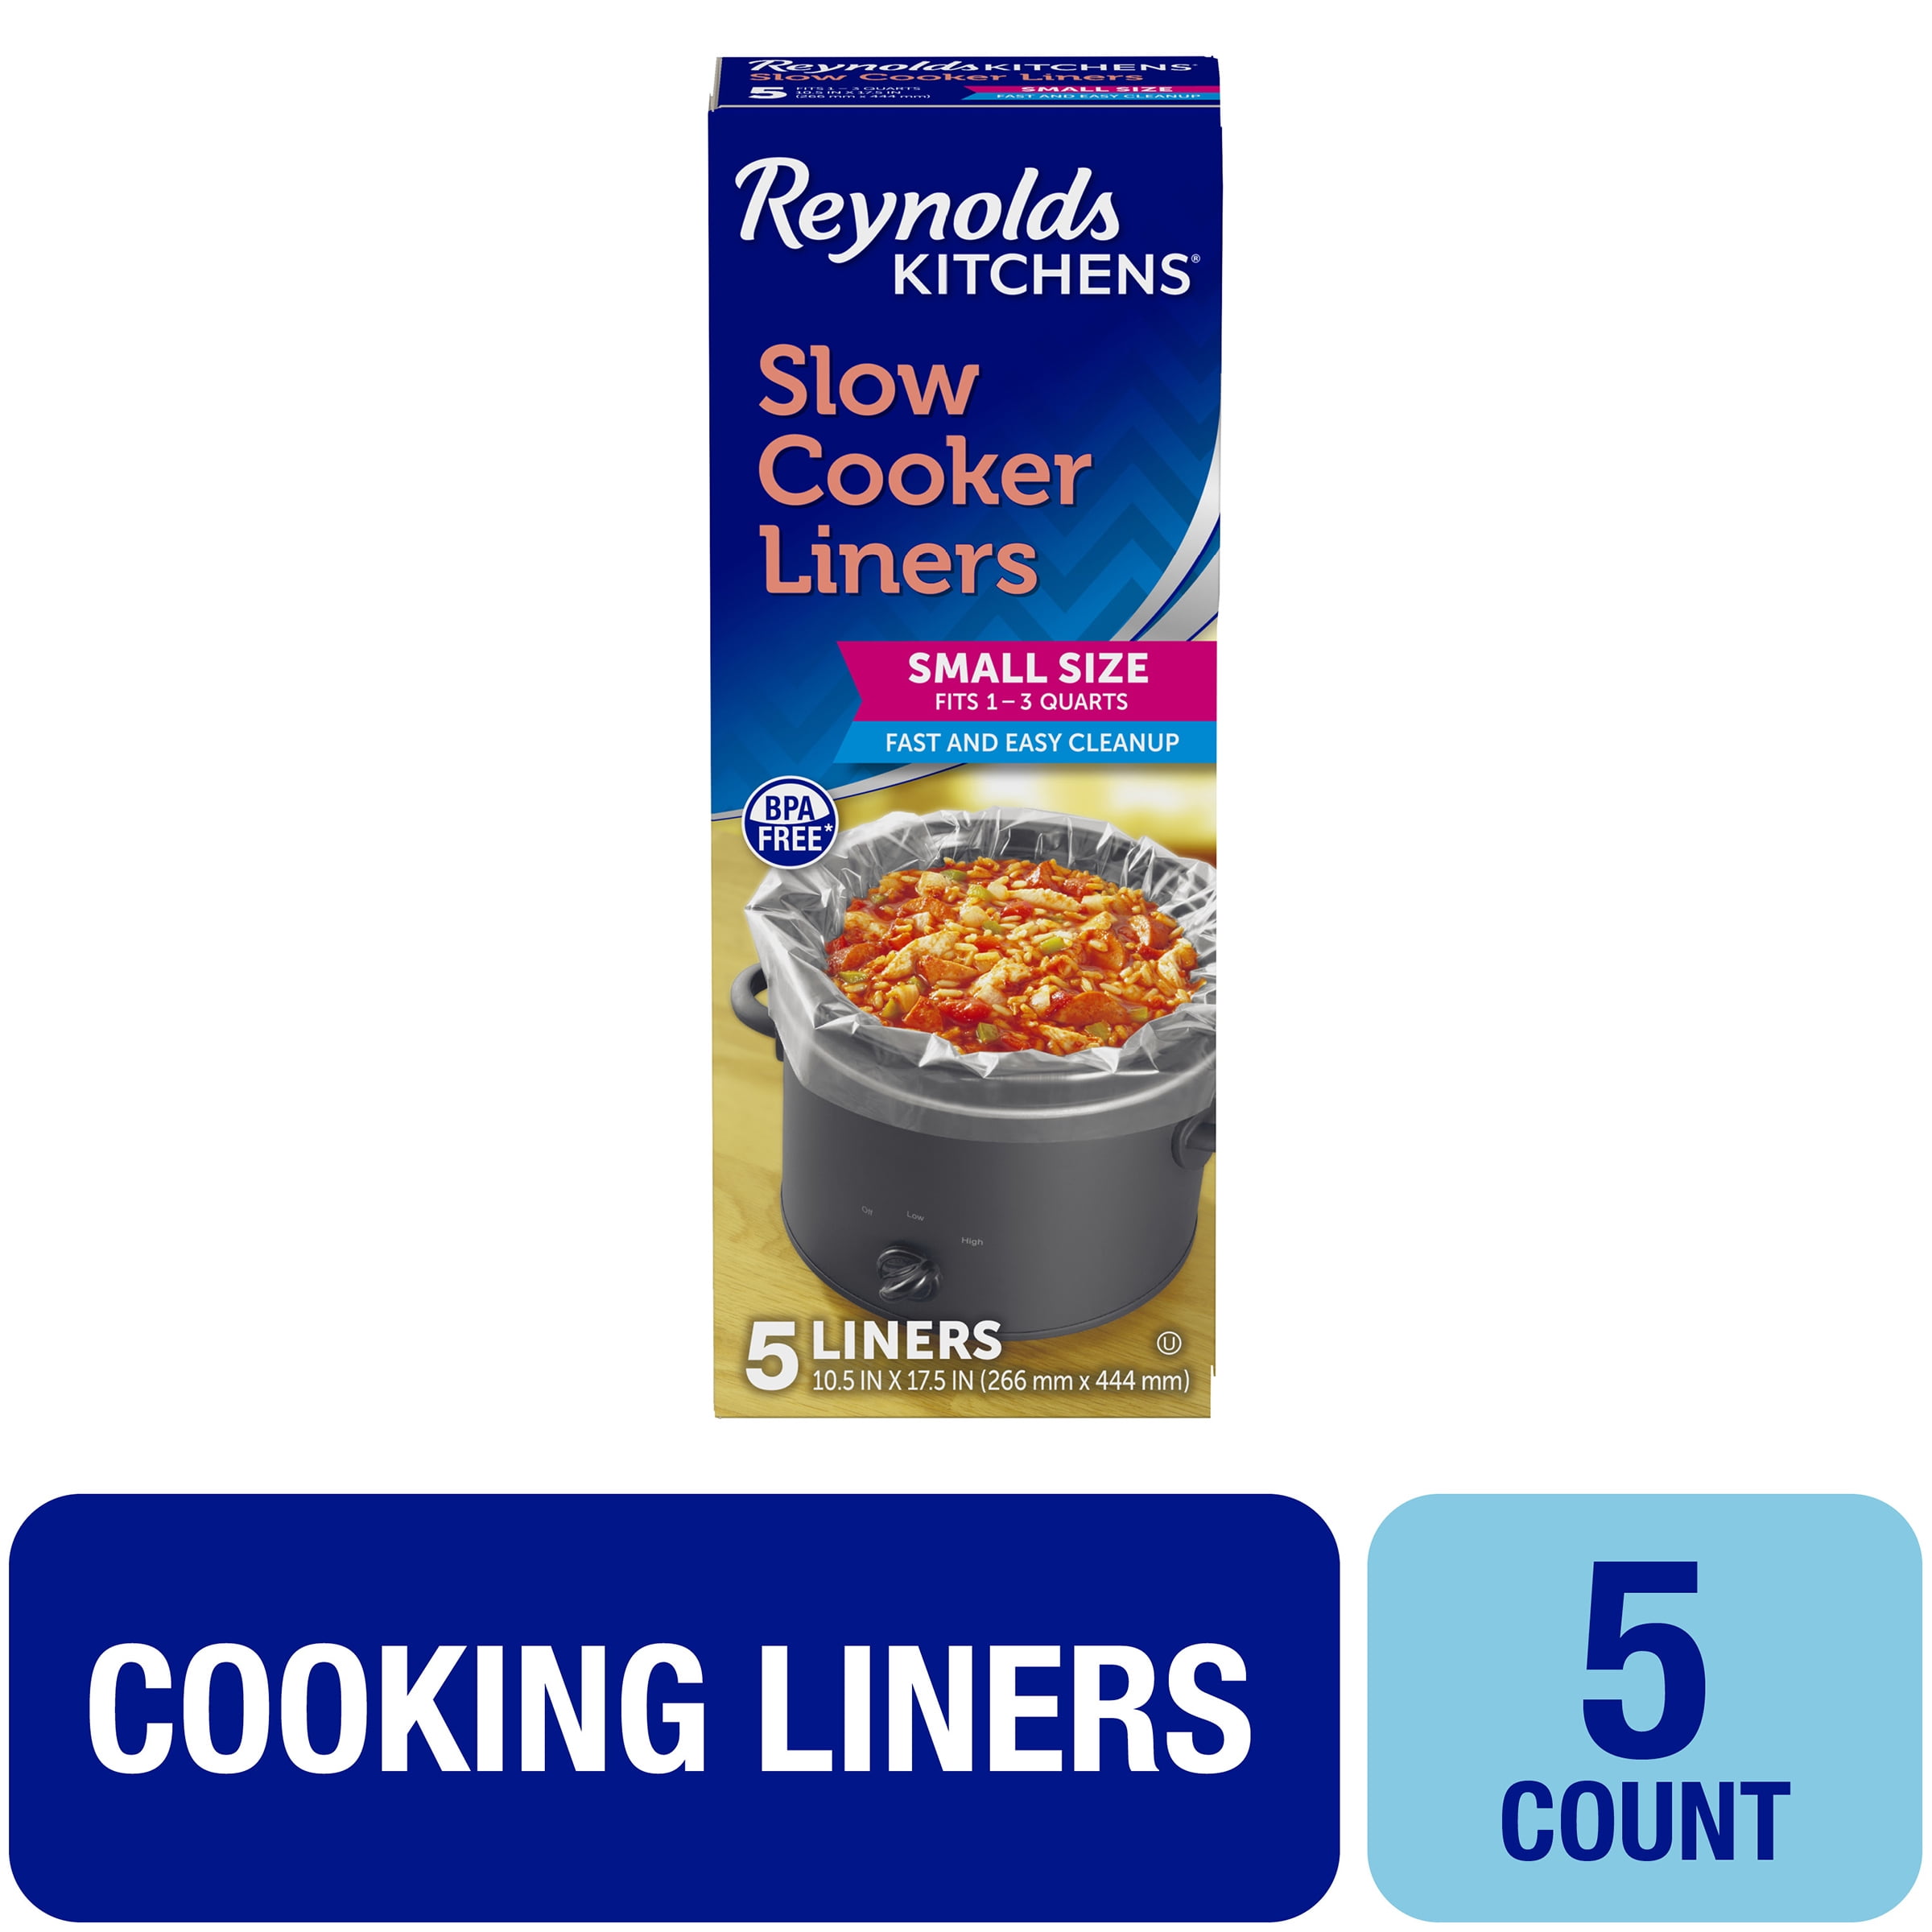 Reynolds Kitchens Slow Cooker Liners, Regular Size - 24 liners